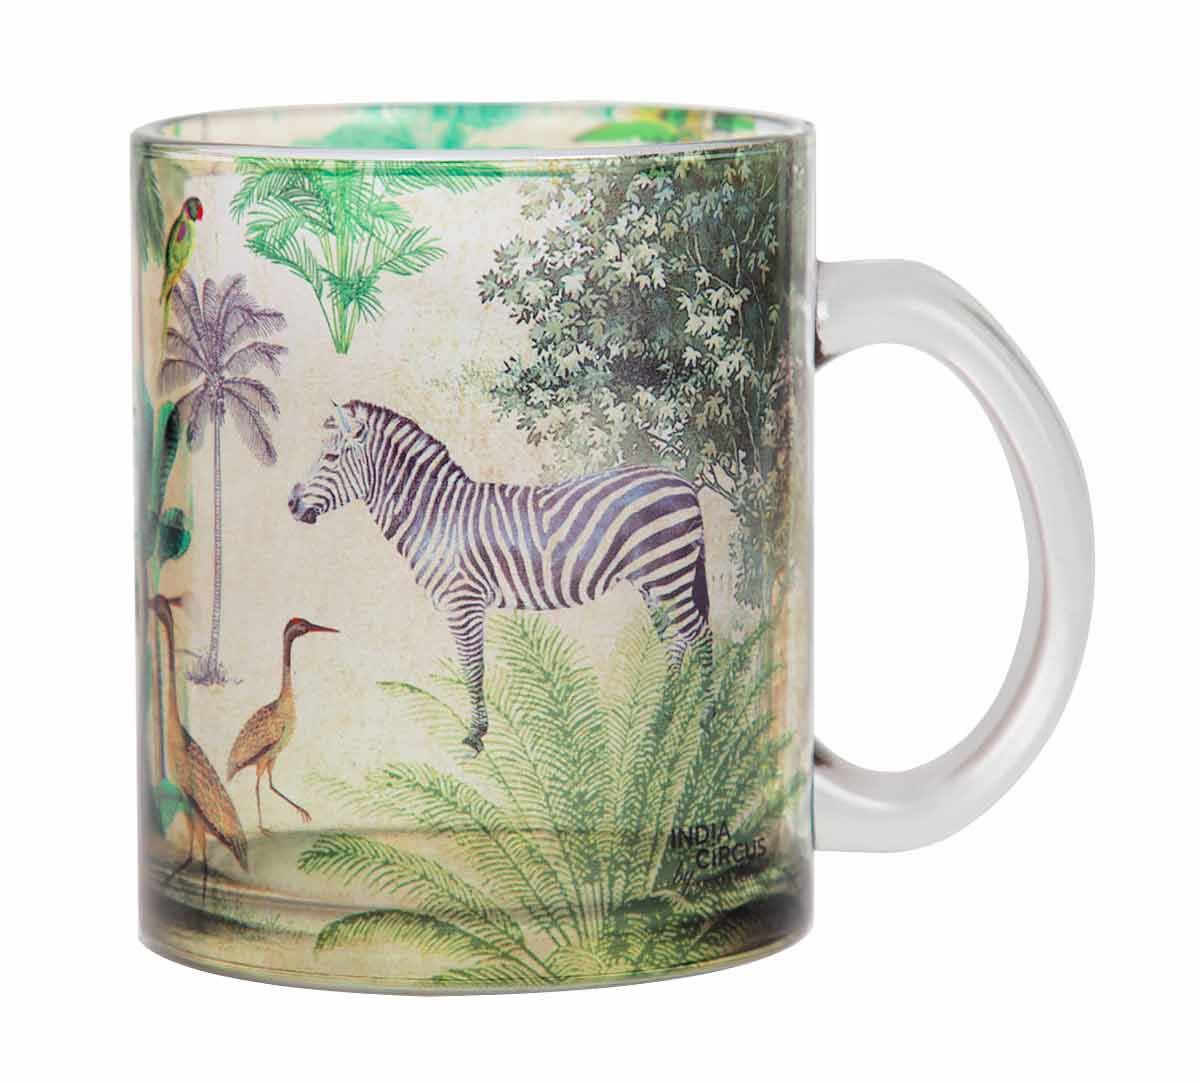 India Circus Forest Dominion Glass Coffee Mug